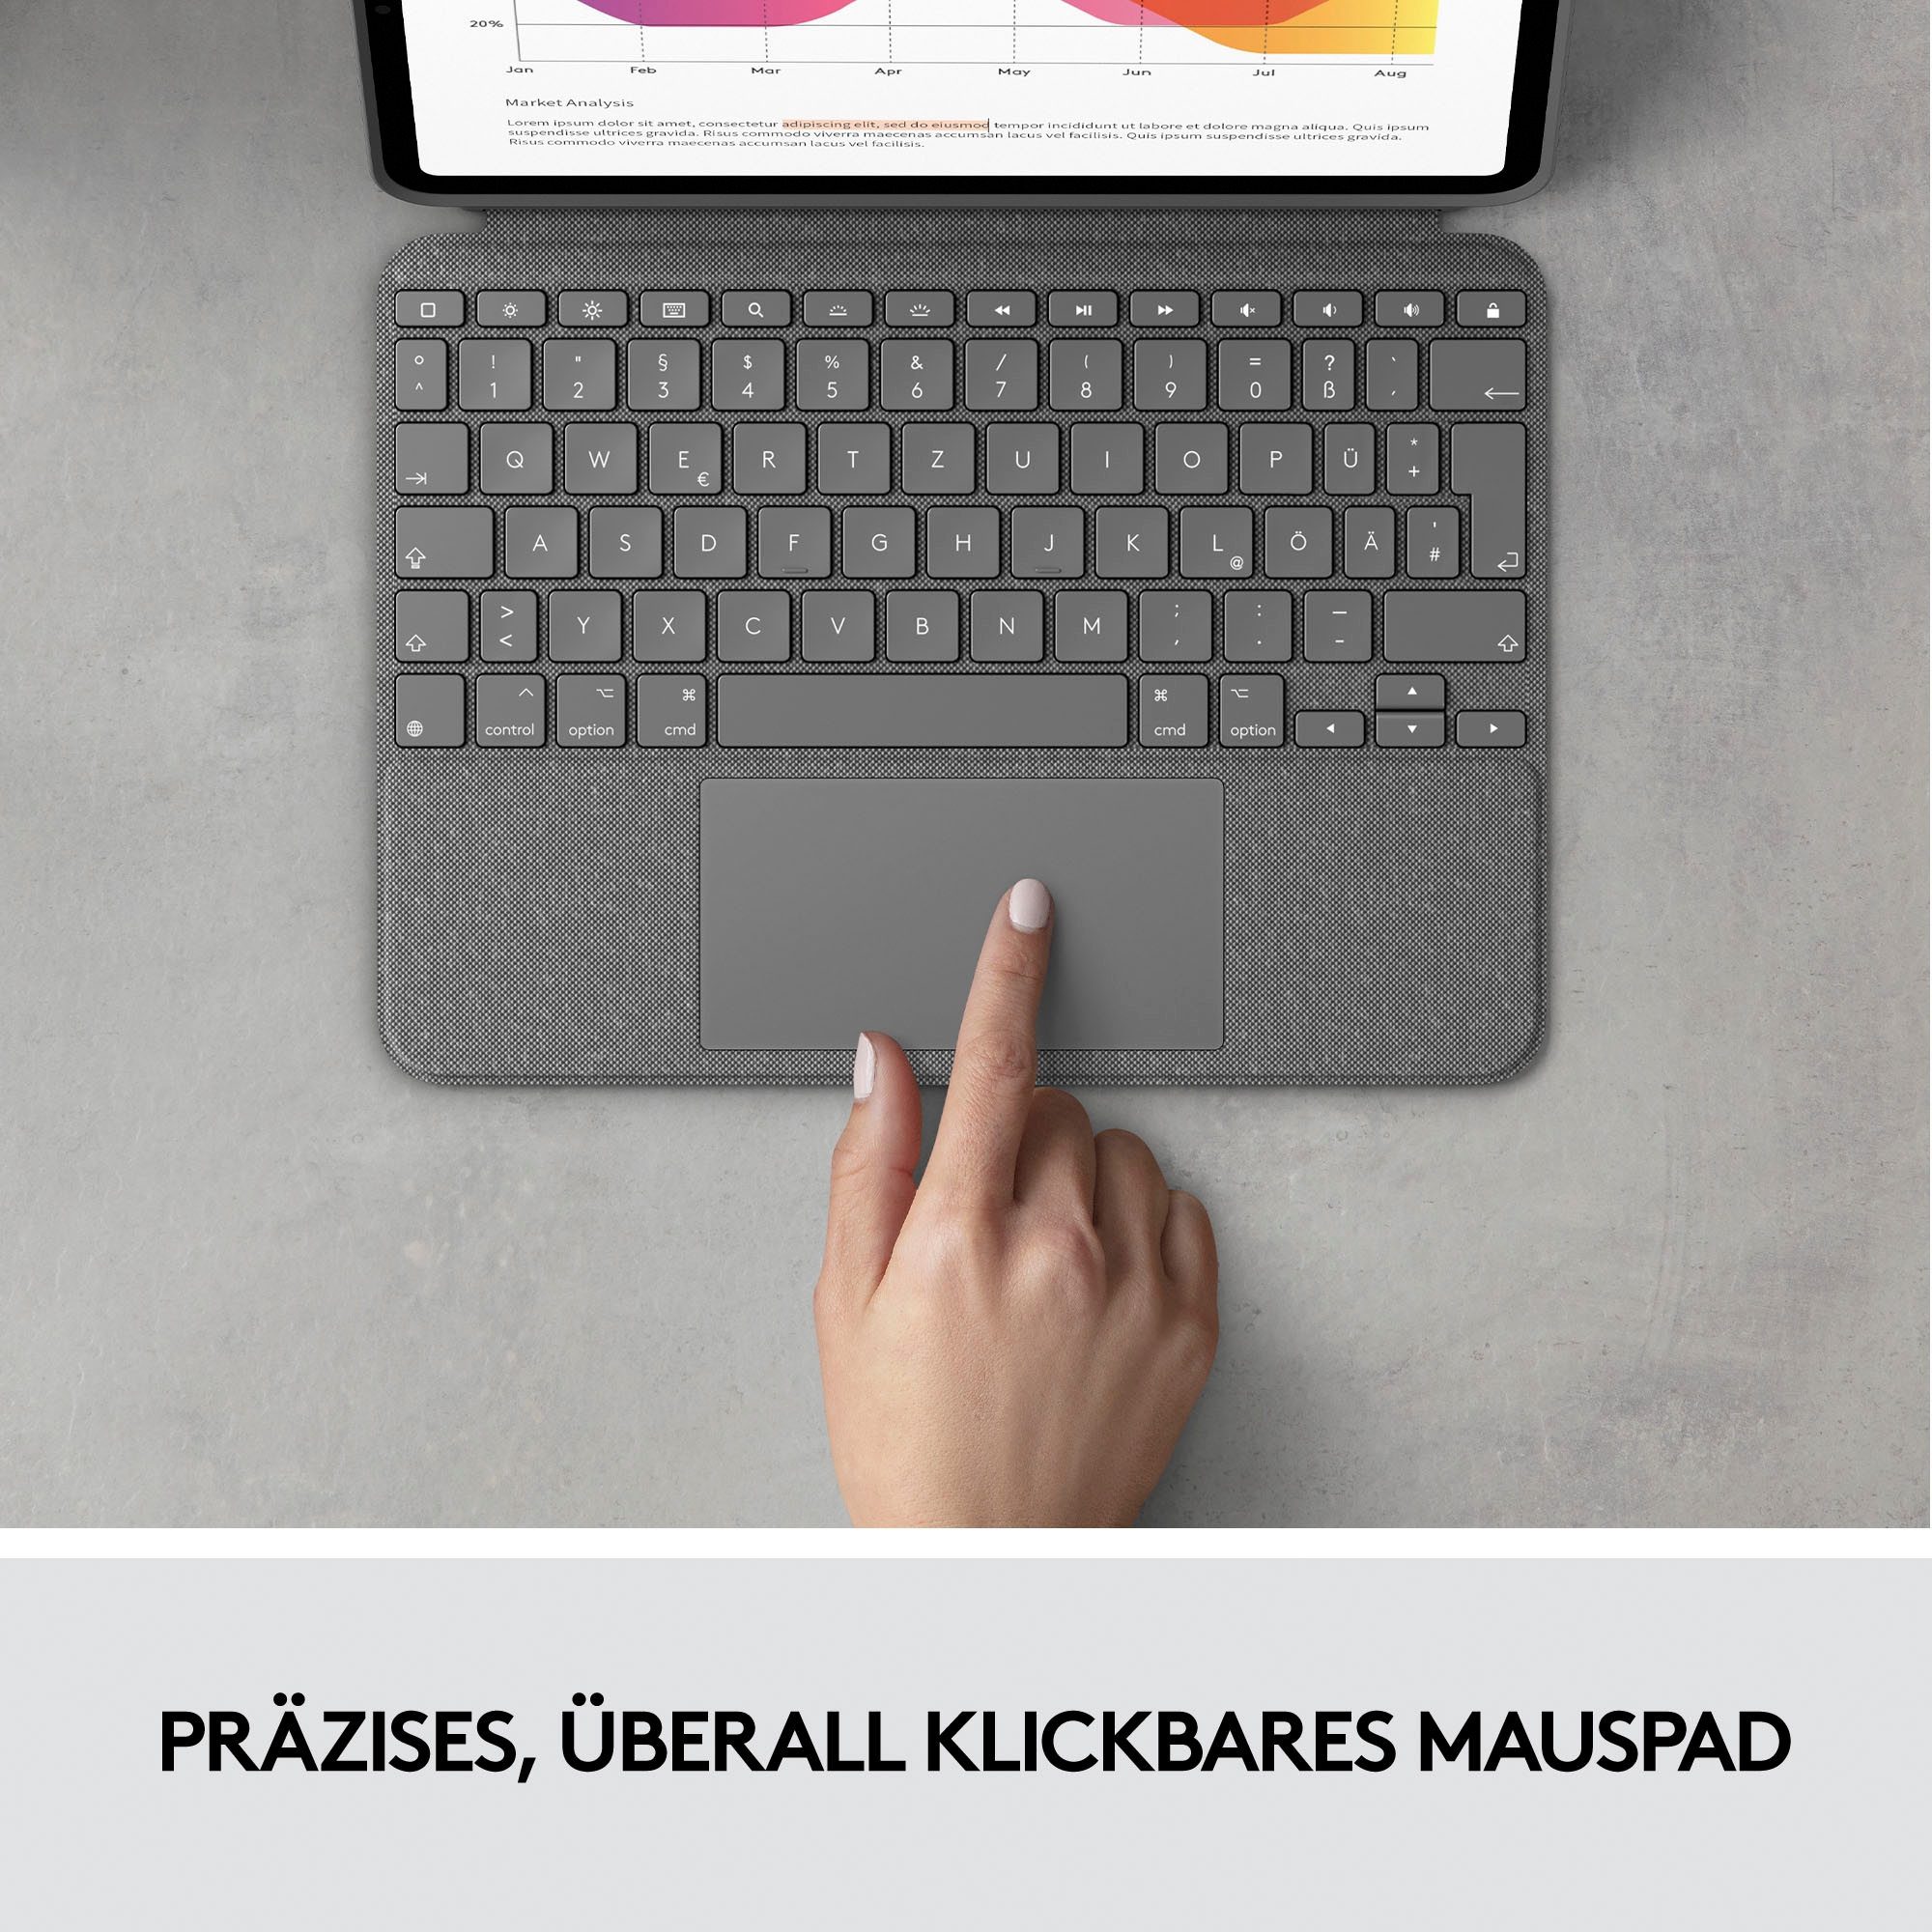 Logitech iPad-Tastatur »Combo Touch iPad Air (4. Gen - 2020) Keyboard Case«, (ausklappbare Füße-Multimedia-Tasten)